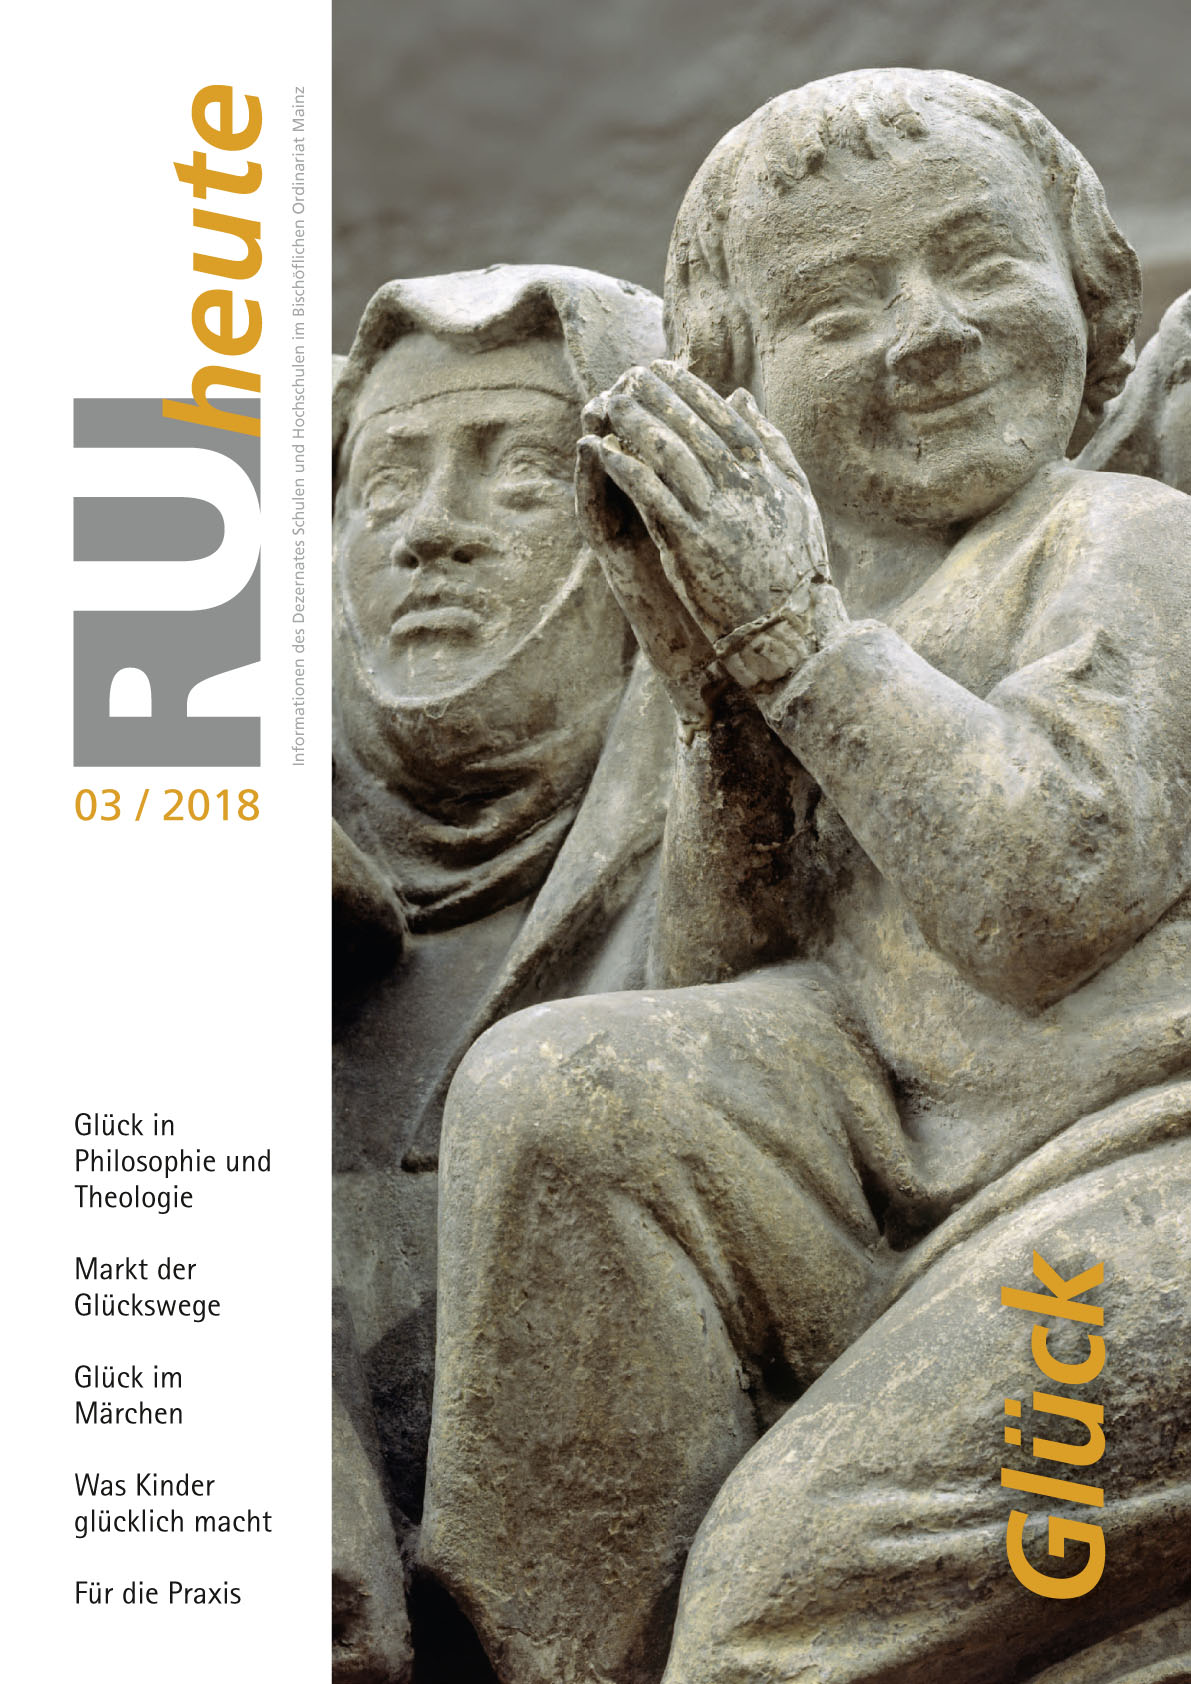 RUheute03-2018 (c) Bistum Mainz